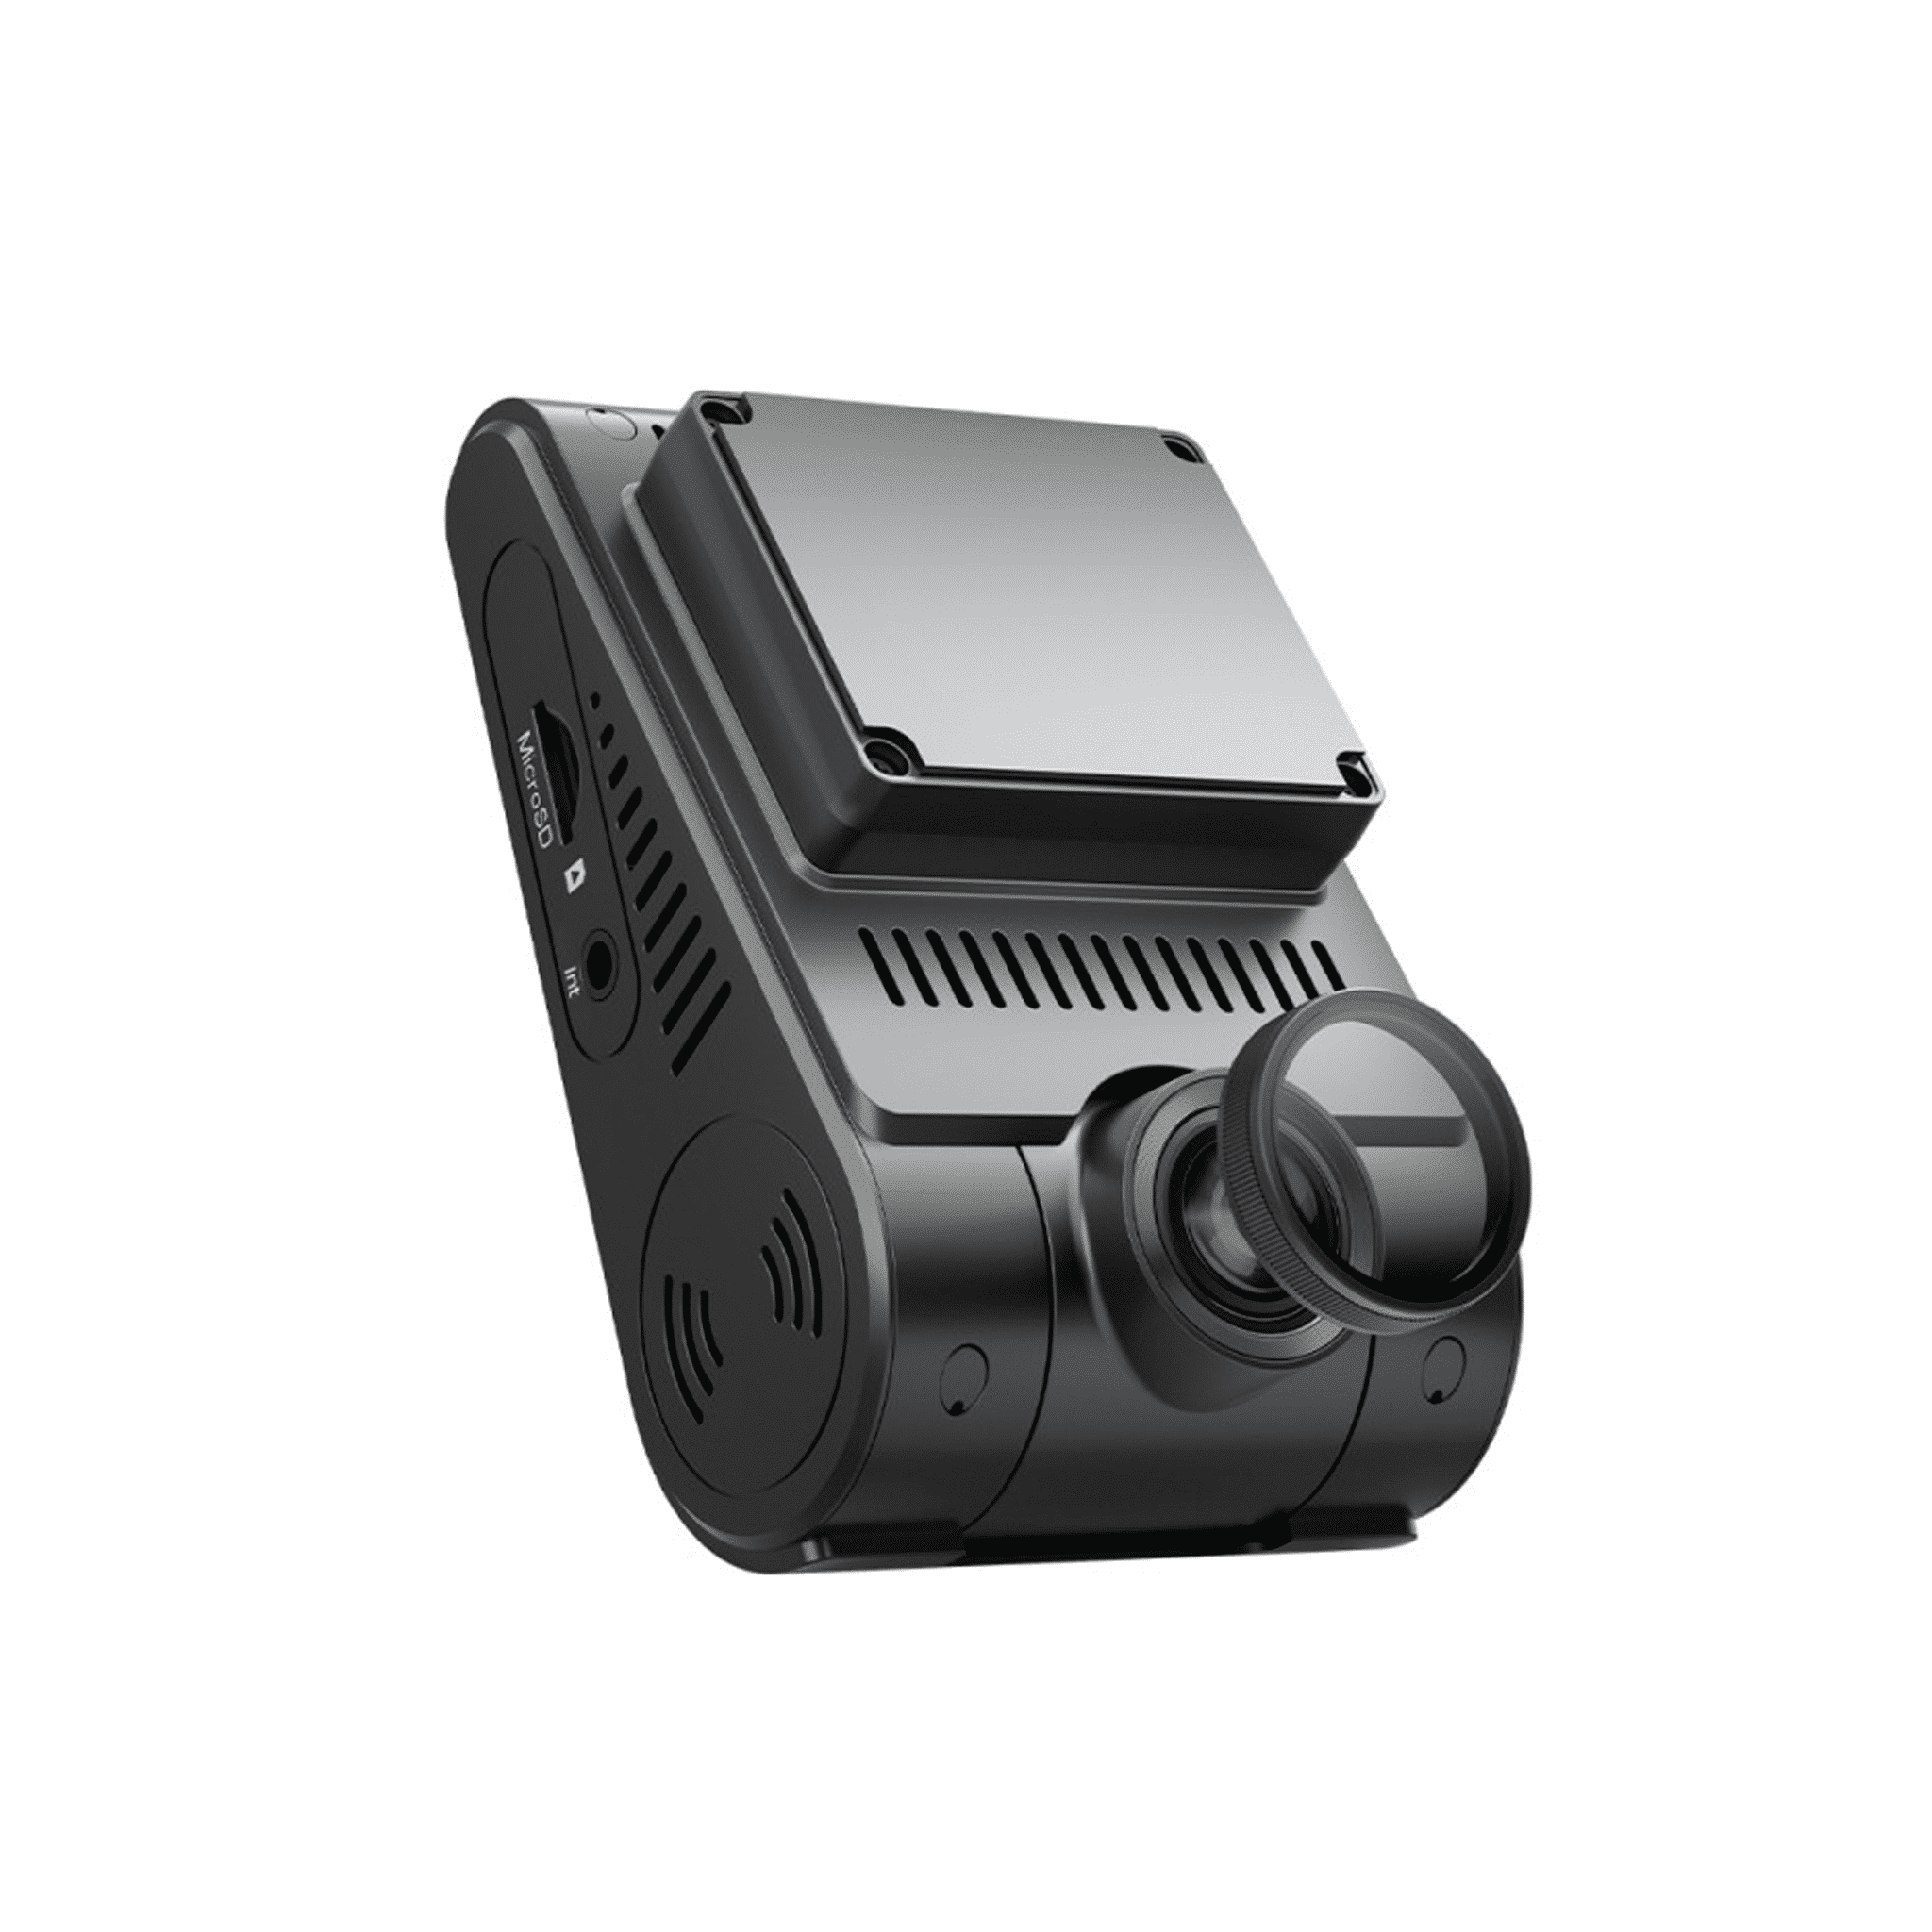 VIOFO A229 Plus 1440p Araç Kamerası | aksesuarlarla